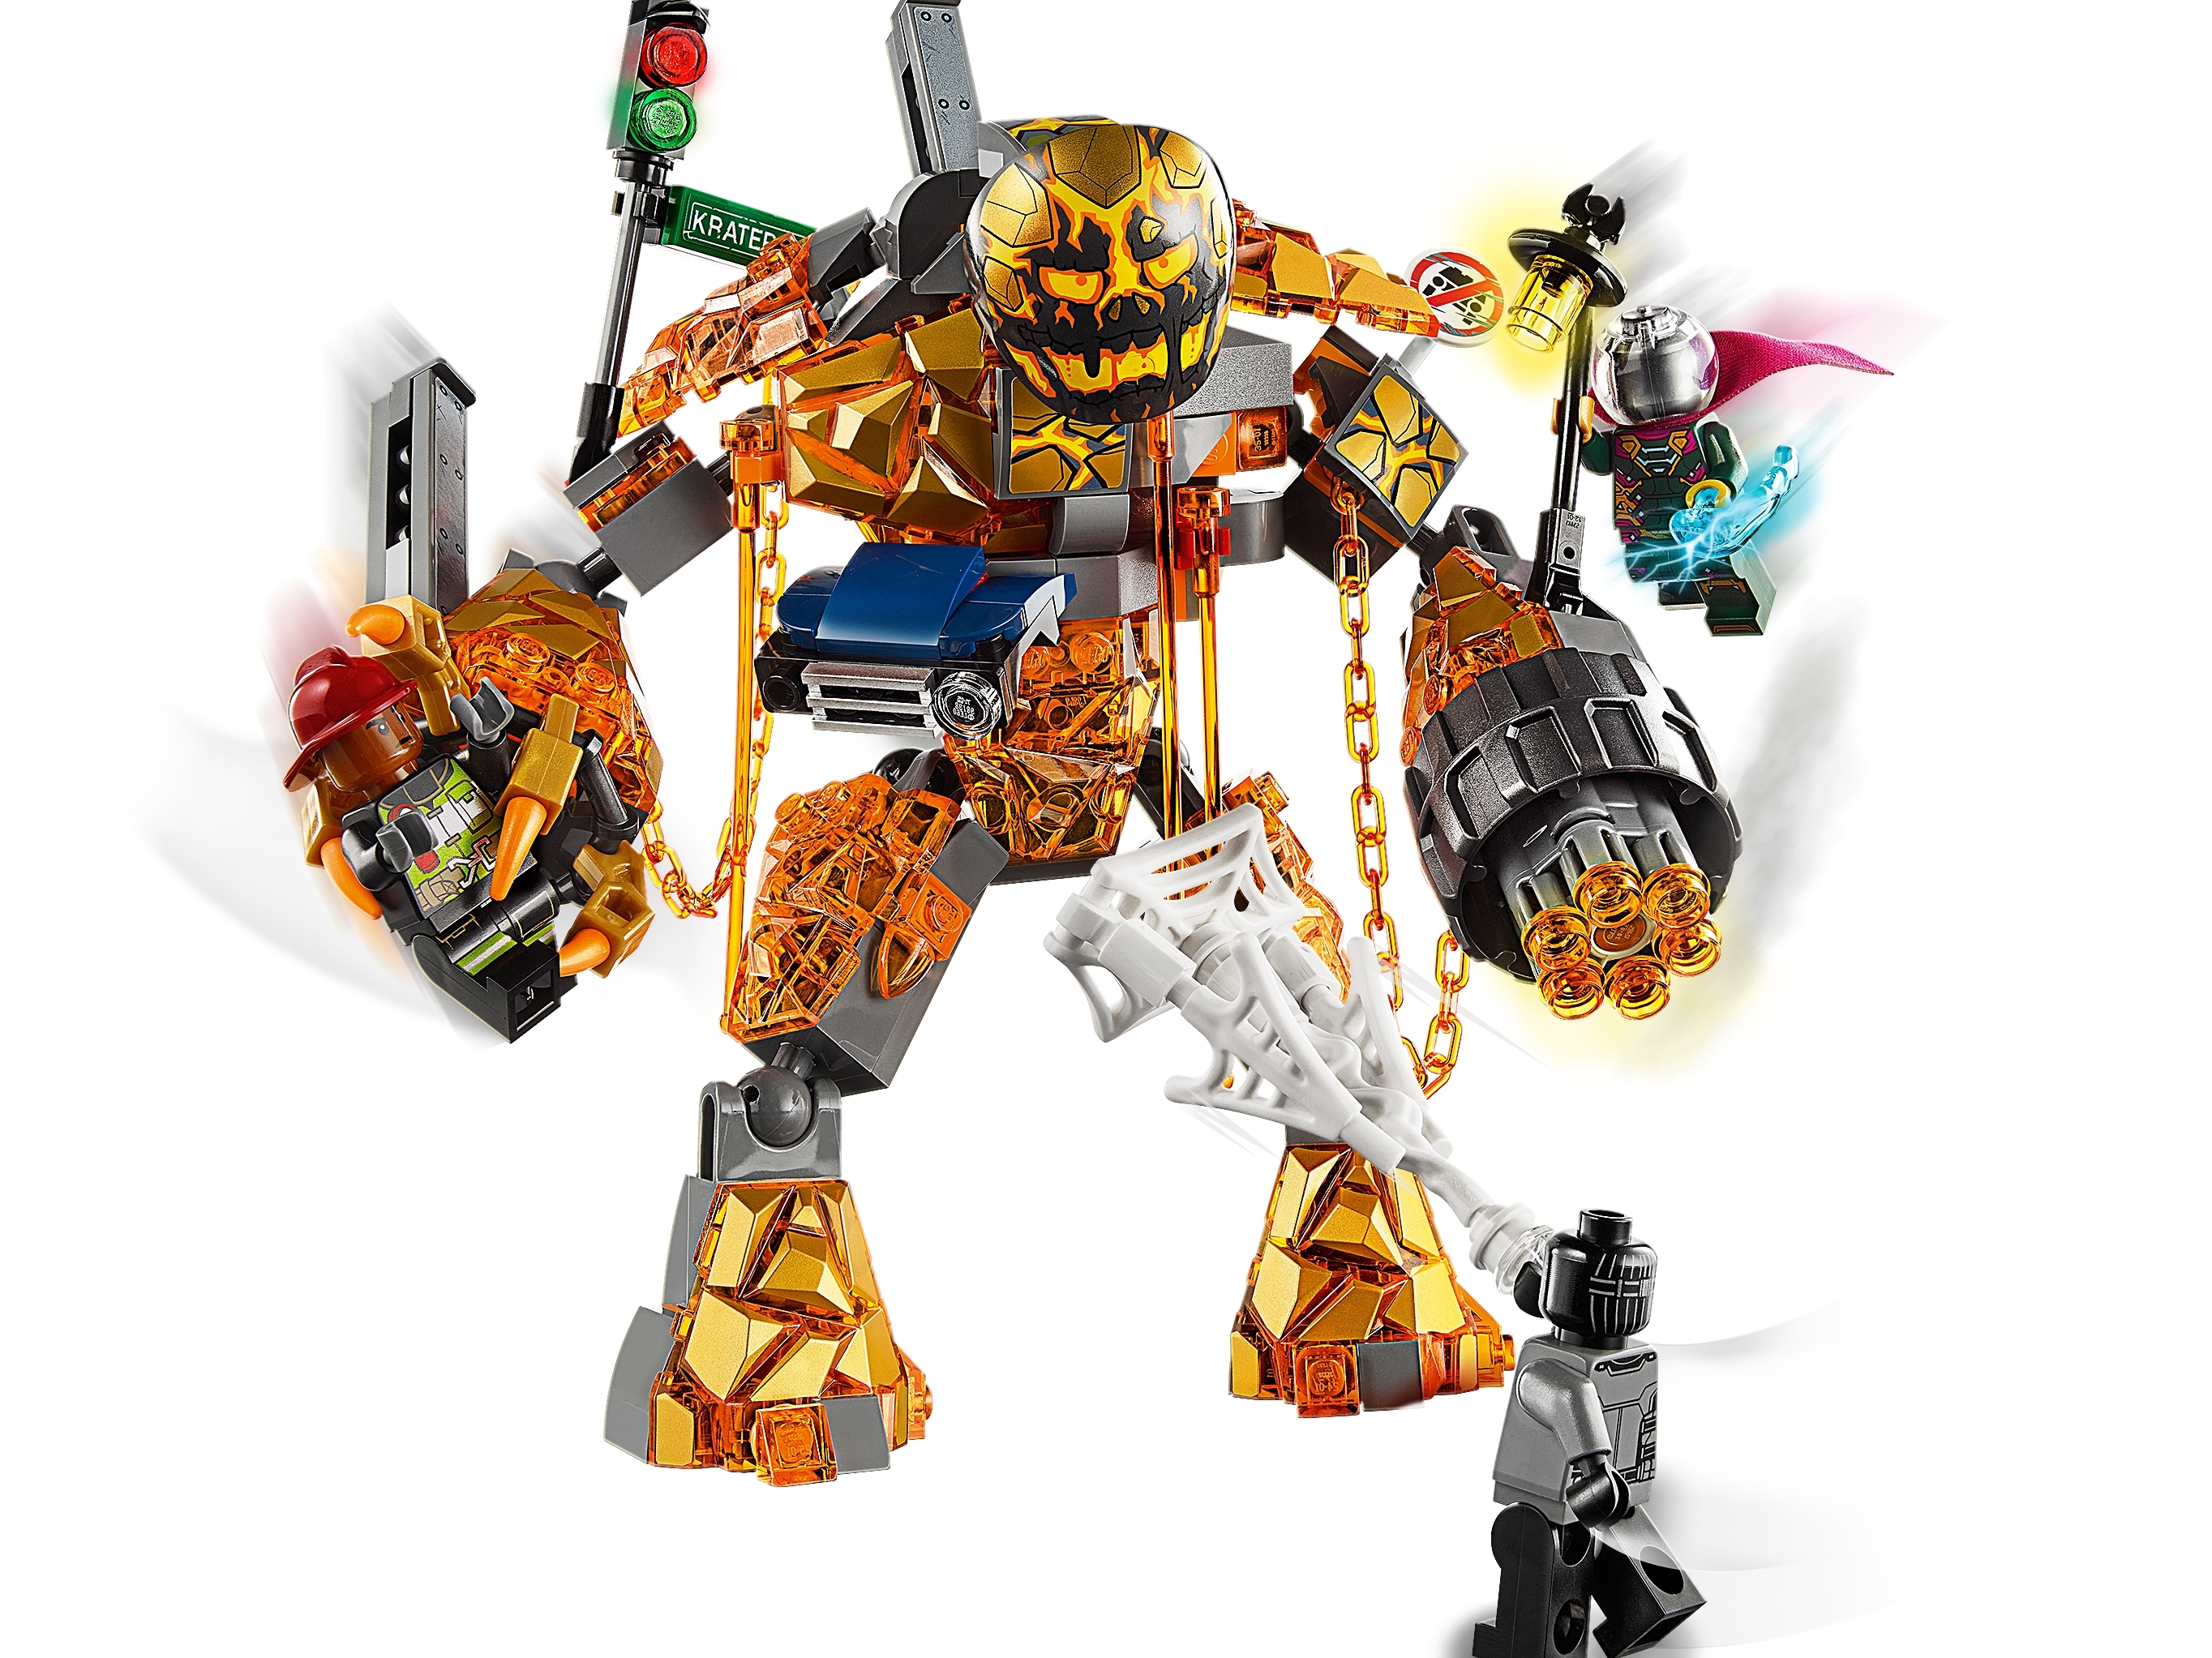 76128 for sale online LEGO Molten Man Battle Super Heroes